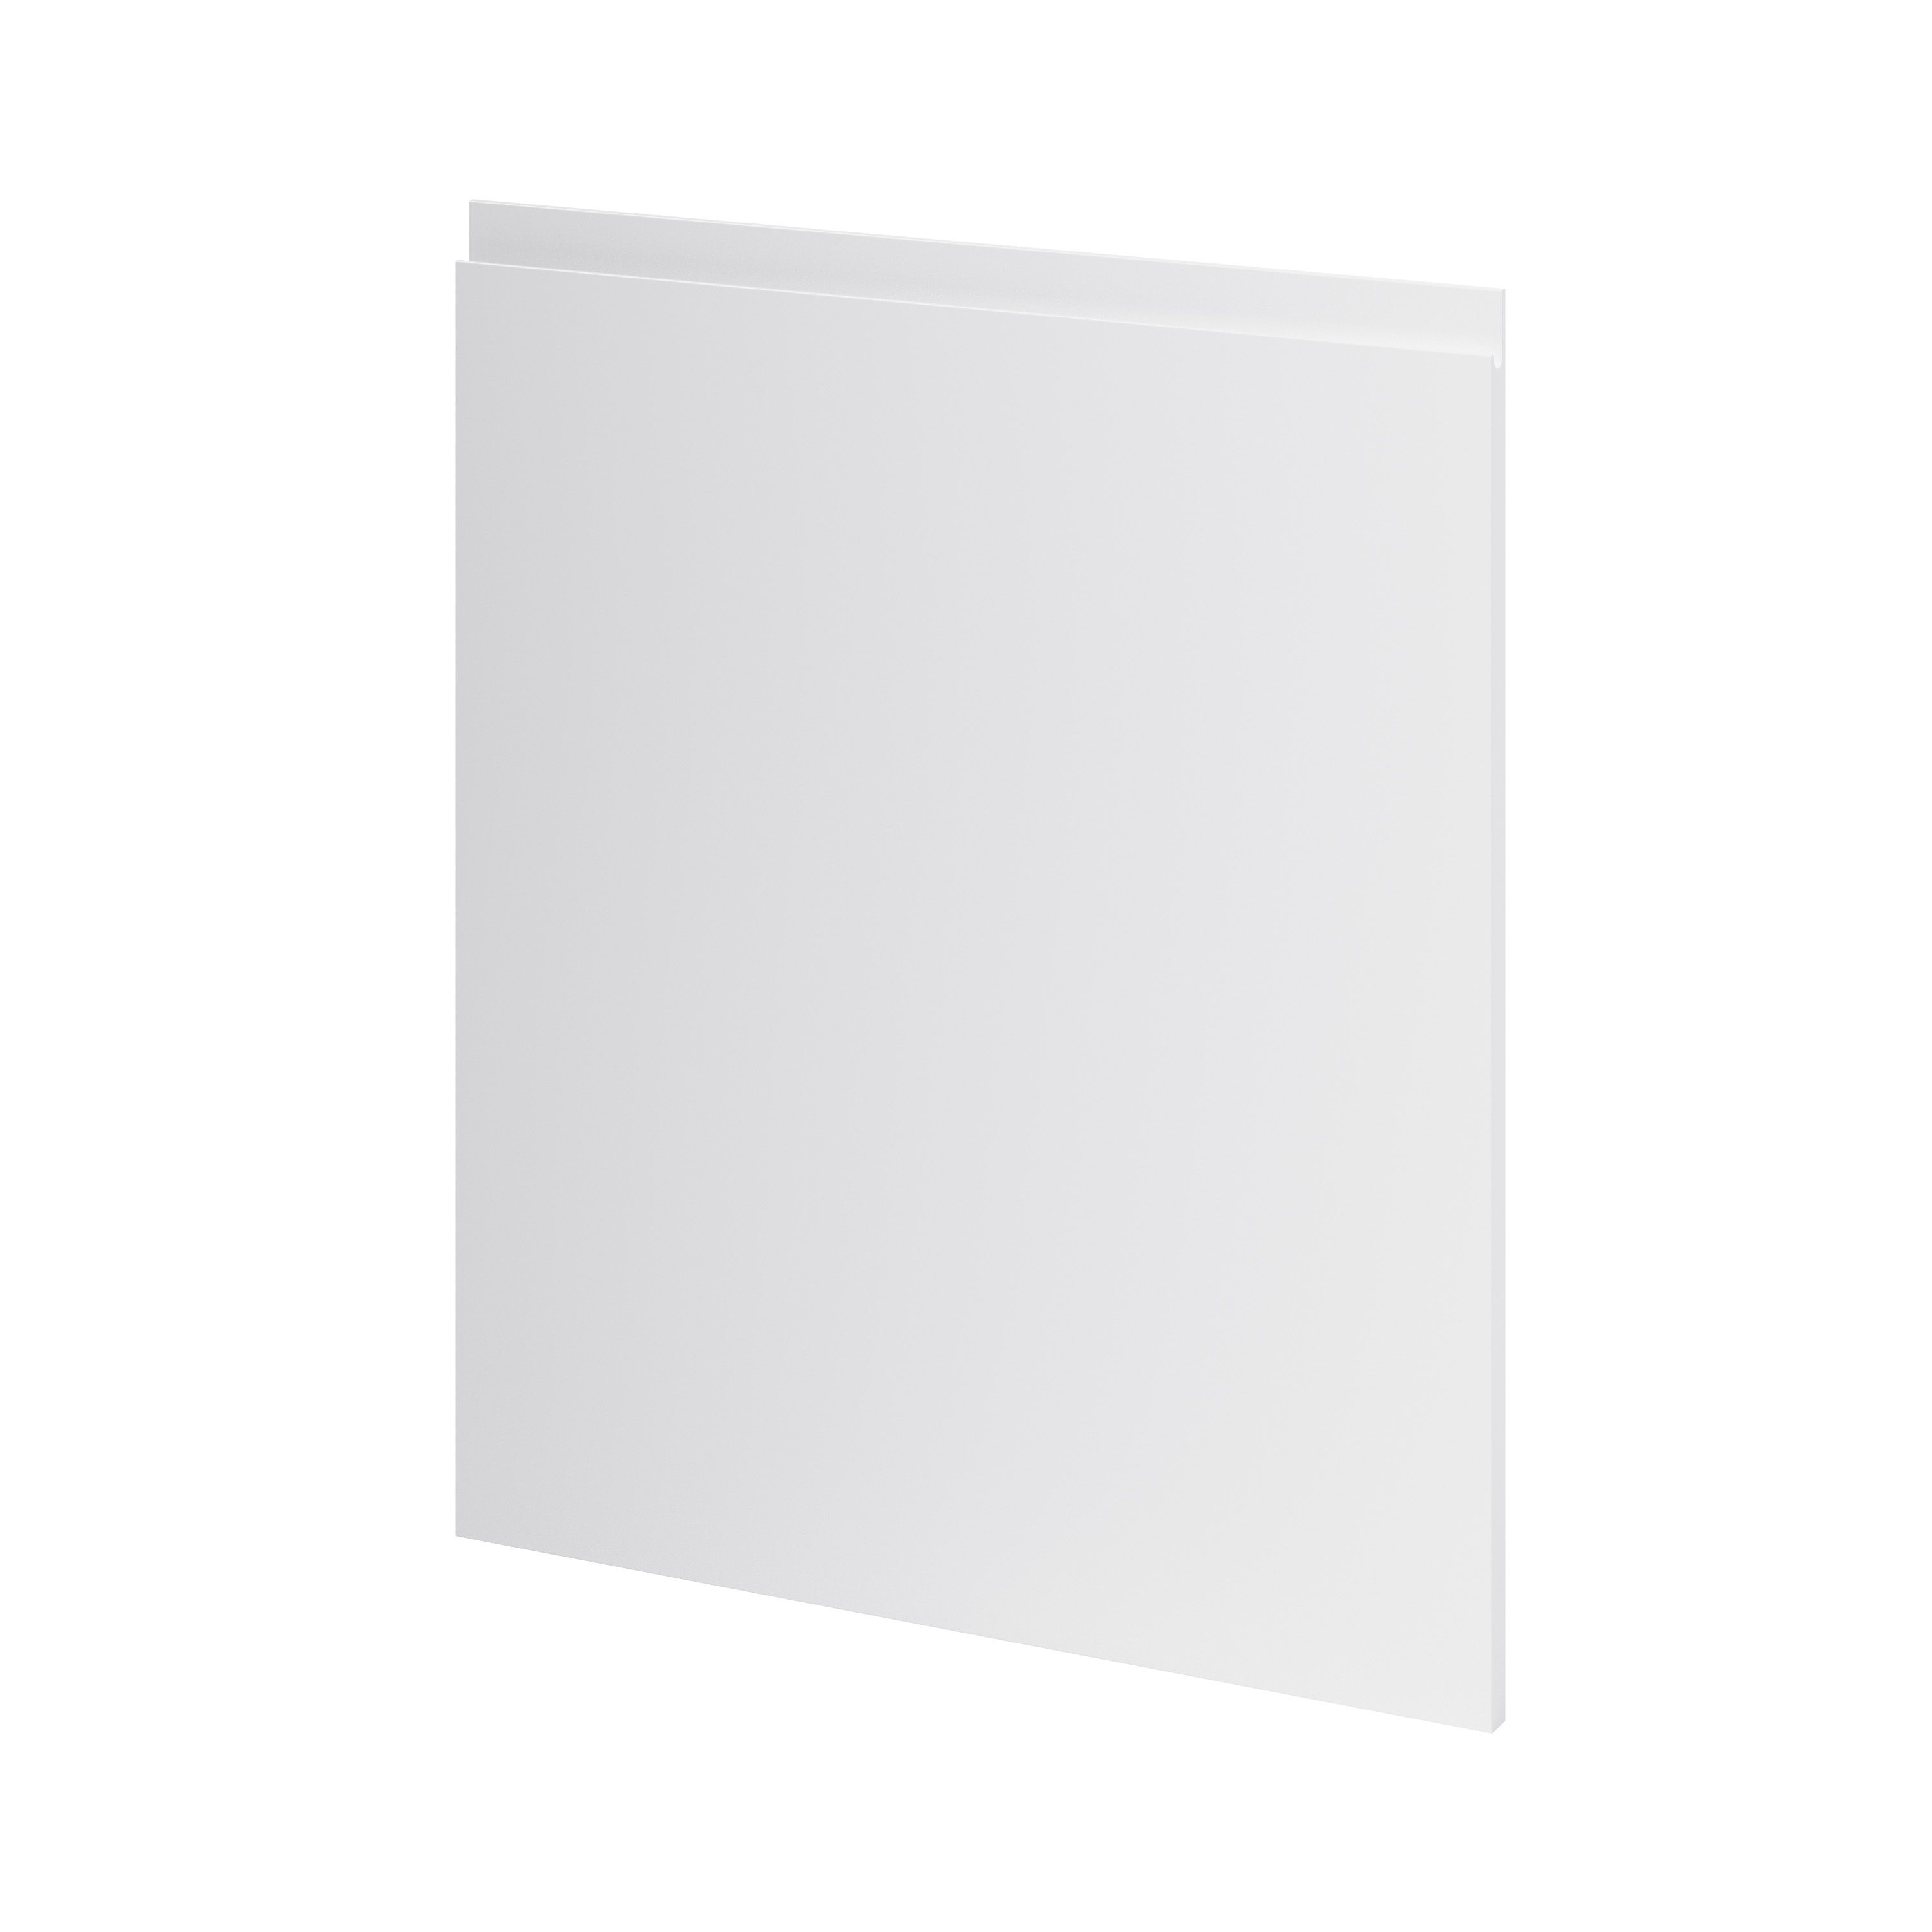 GoodHome Garcinia Gloss light grey integrated handle Highline Cabinet door (W)600mm (H)715mm (T)19mm